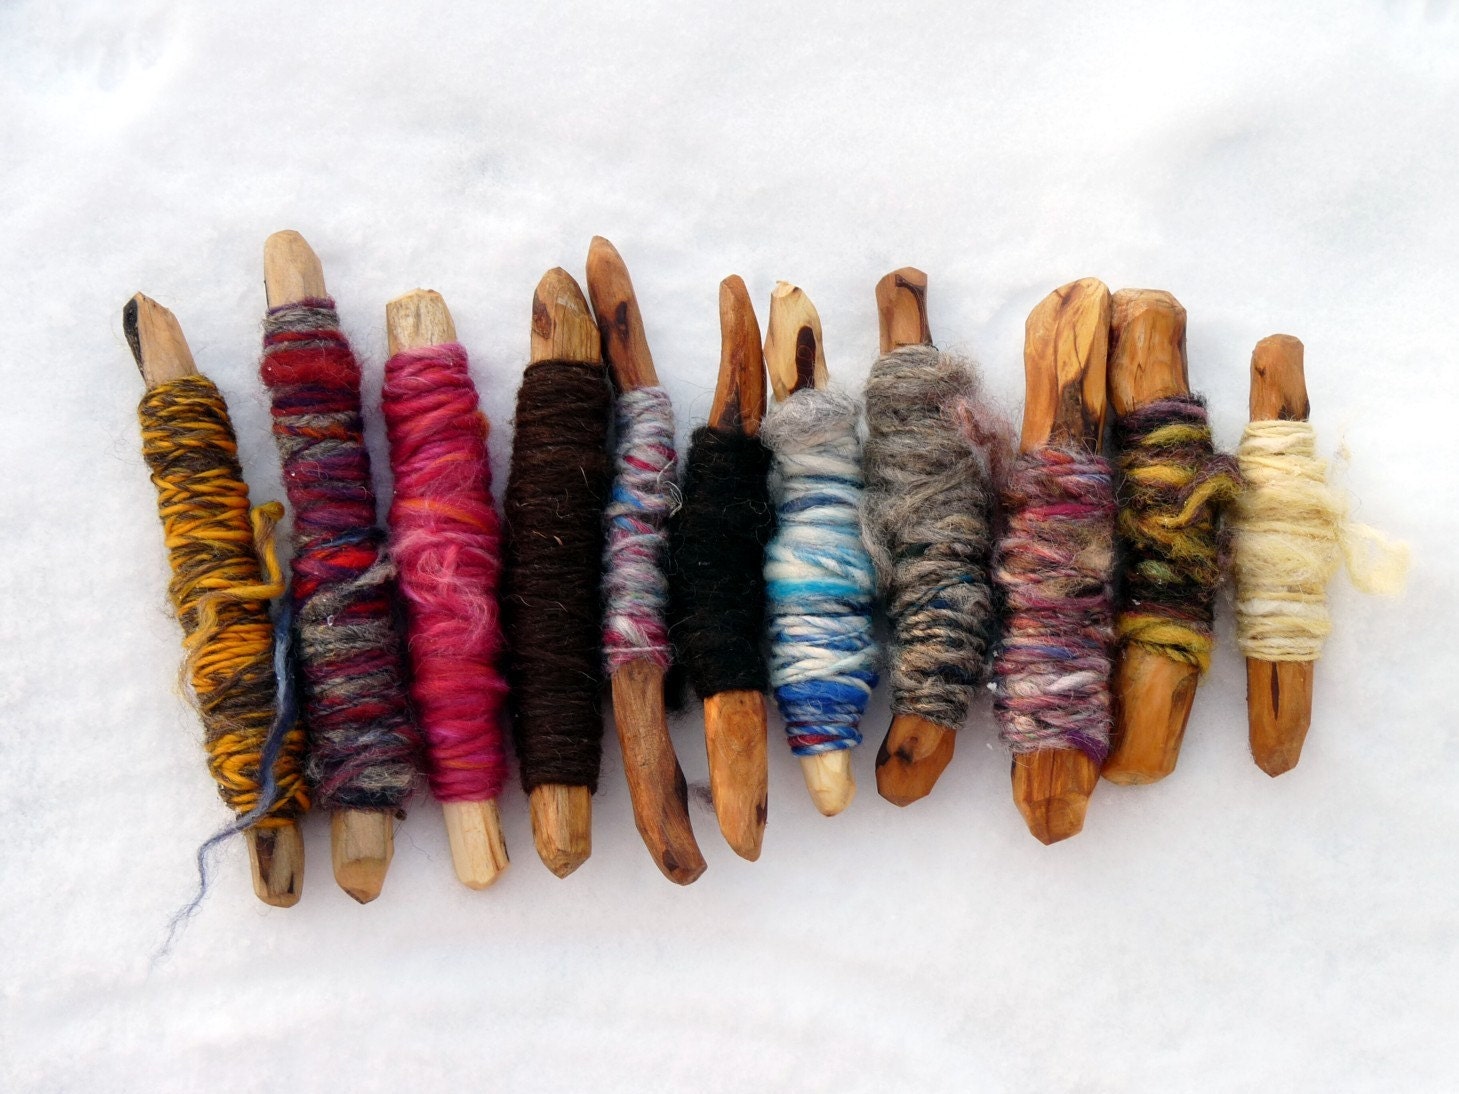 Wooden sticks for storing little balls of yarns